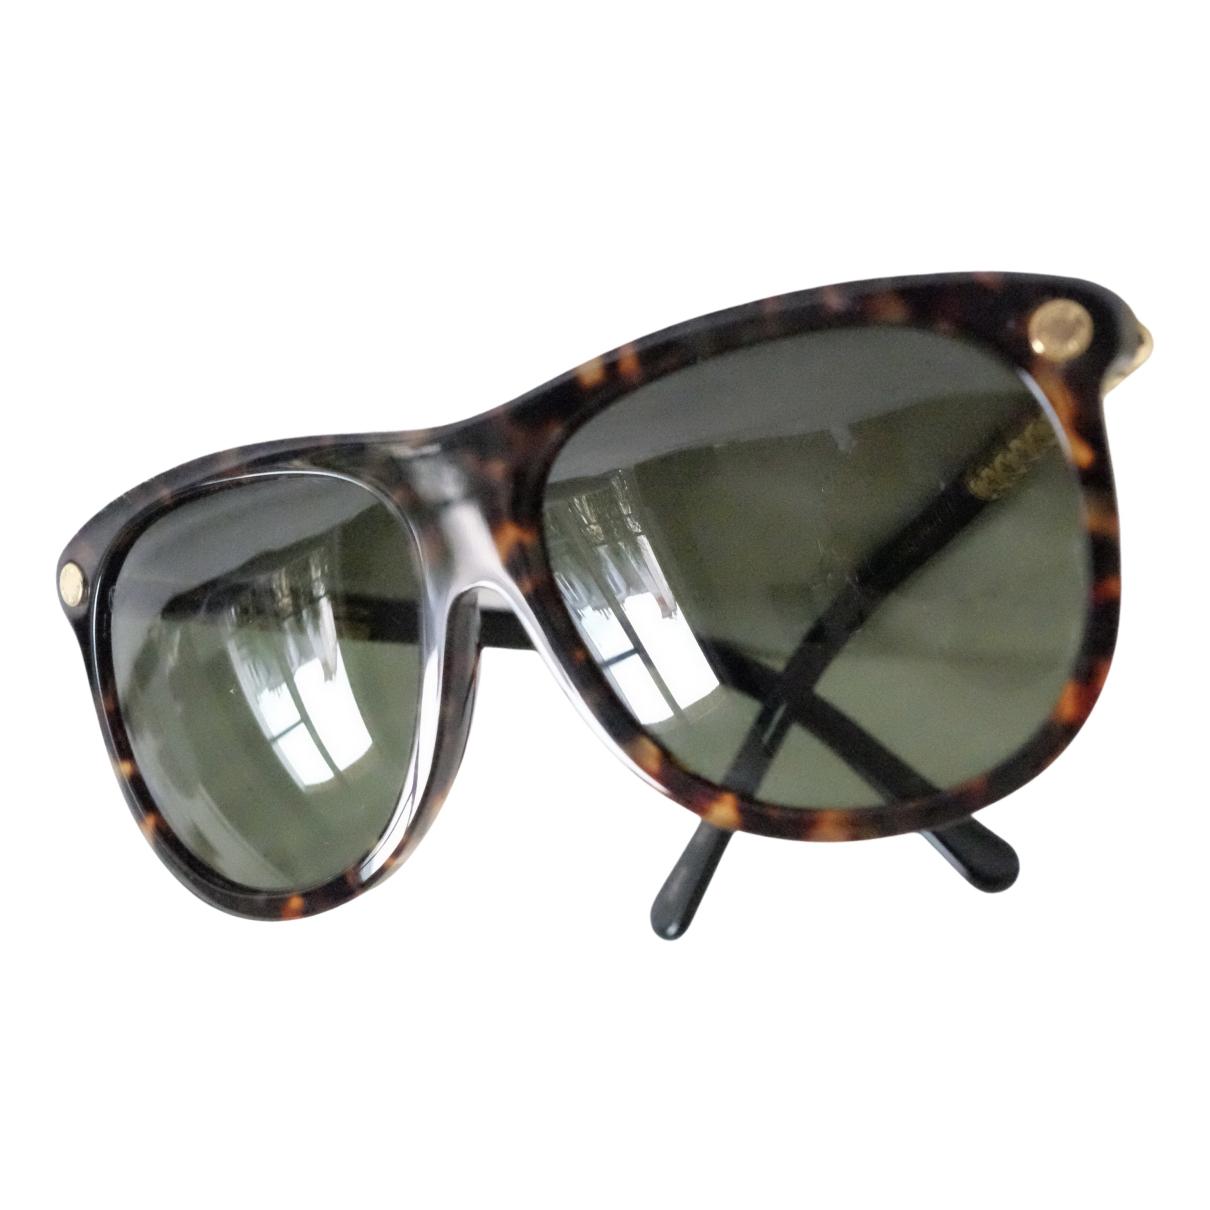 Louis Vuitton sunglasses women gold frame LV mark Z0262U Lens